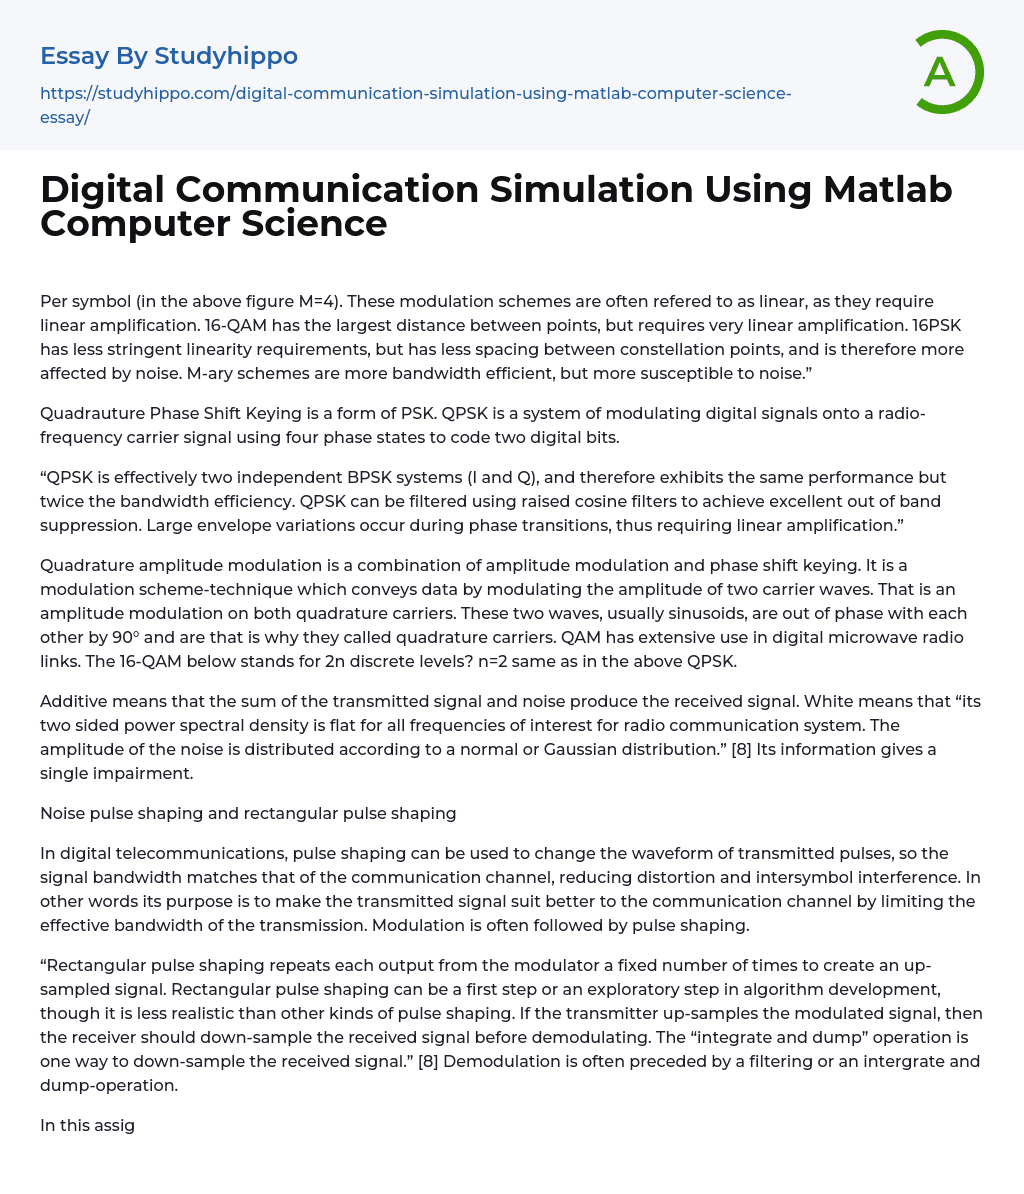 Digital Communication Simulation Using Matlab Computer Science Essay Example